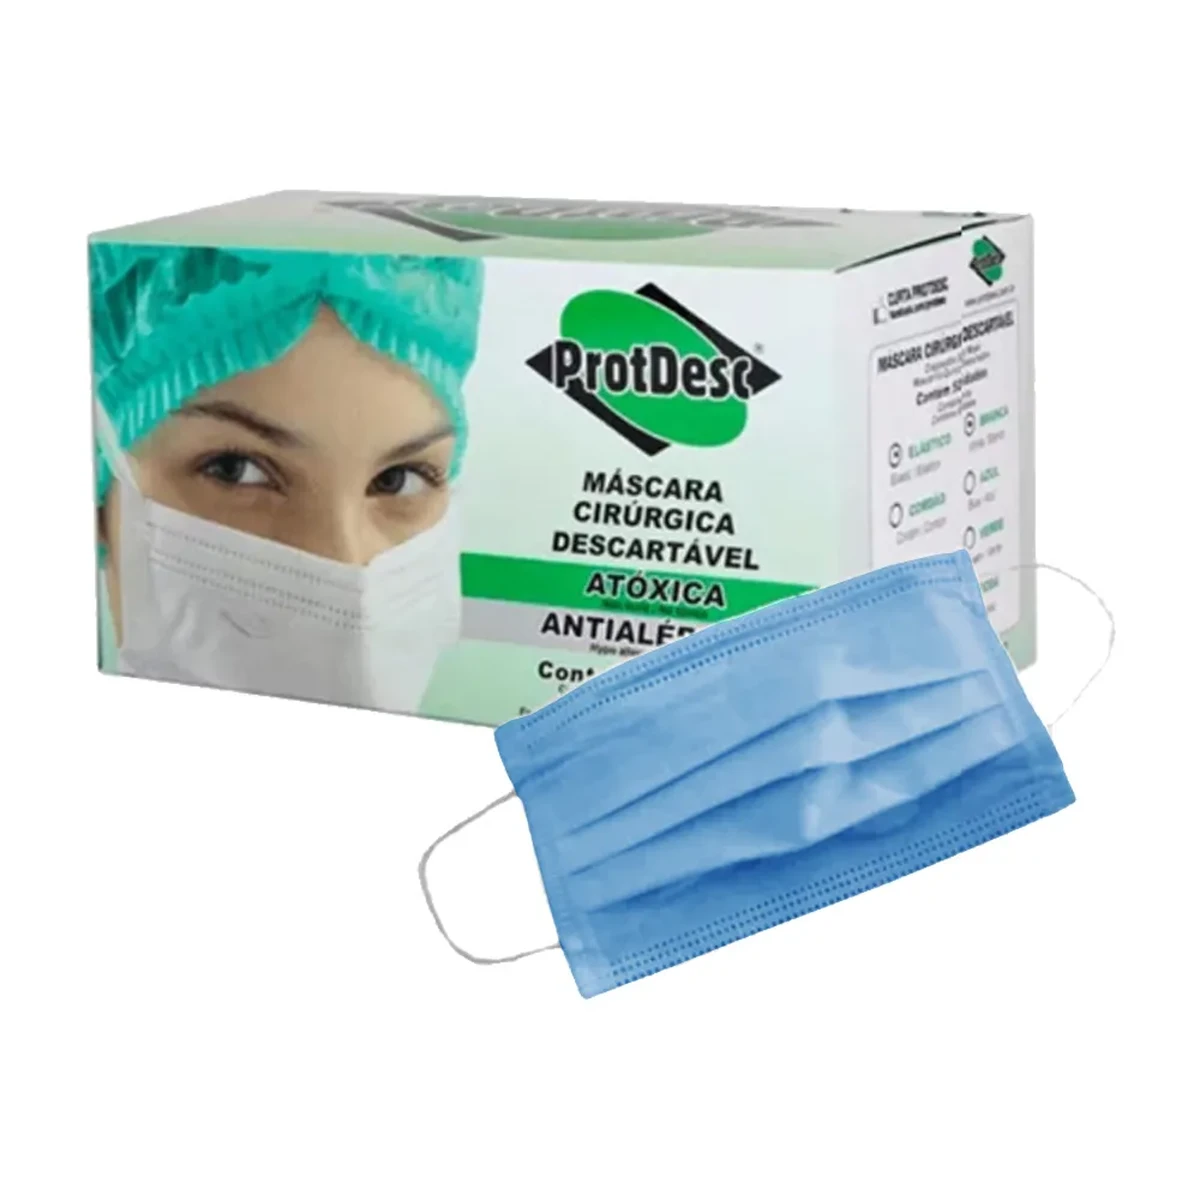 Foto do produto Máscara Cirúrgica Azul Descartável com Elástico caixa com 50 unid Protdesc